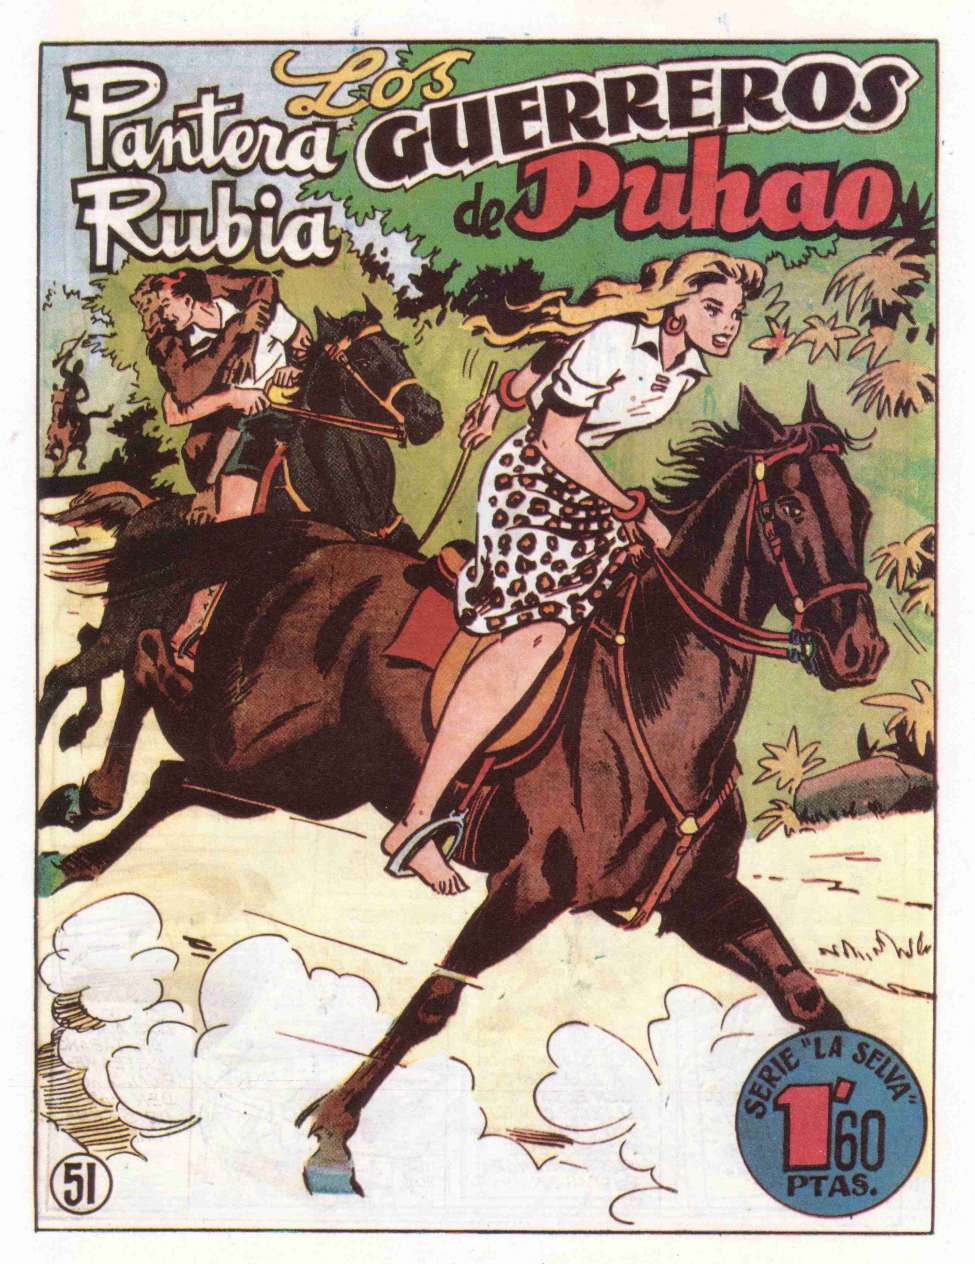 Comic Book Cover For Pantera Rubia 39 - Los Guerreros De Puchao